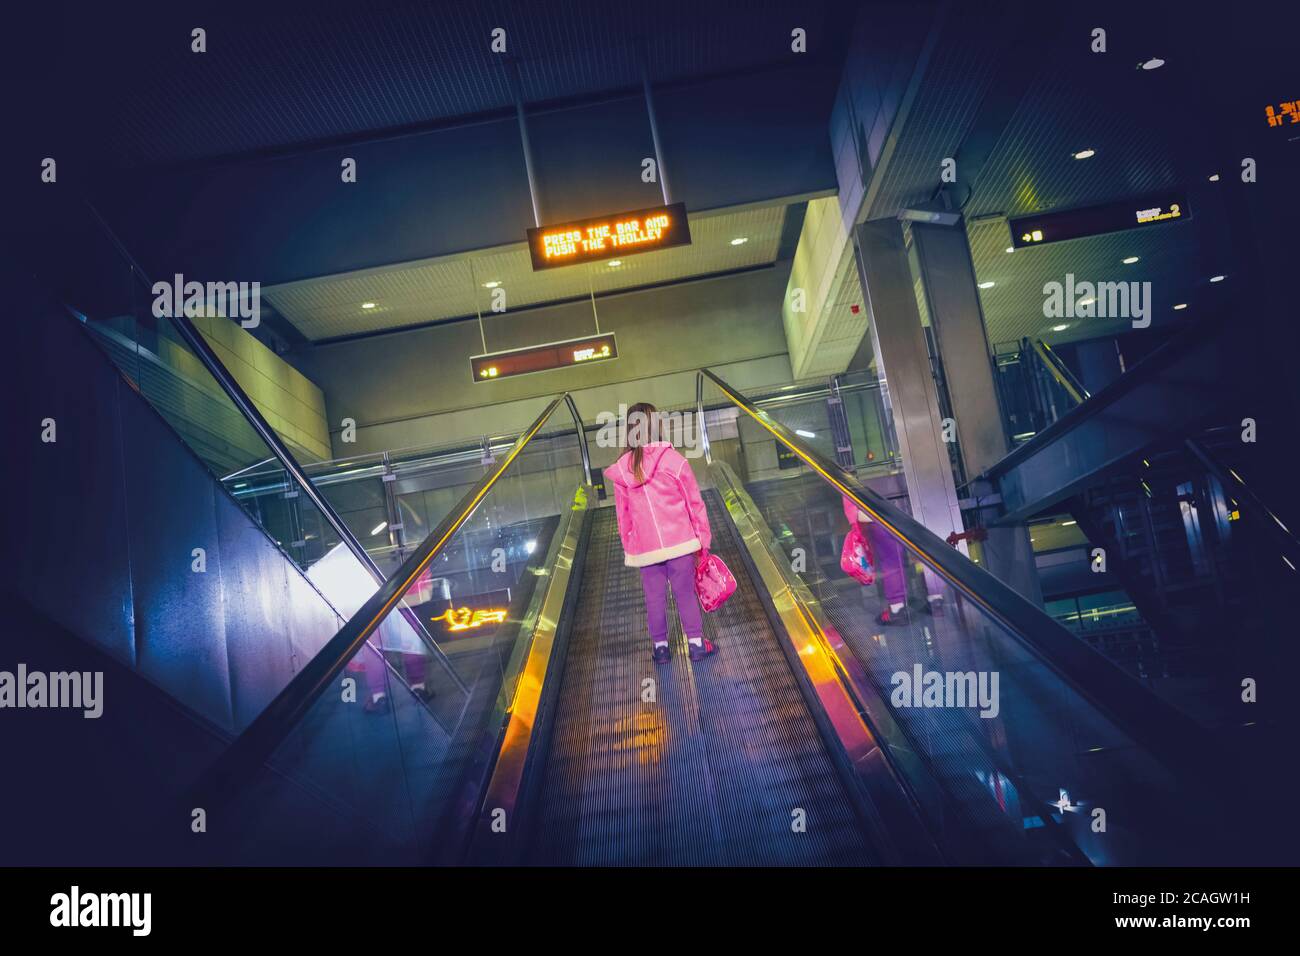 Small child alone on escalator in airport. Stock Photo